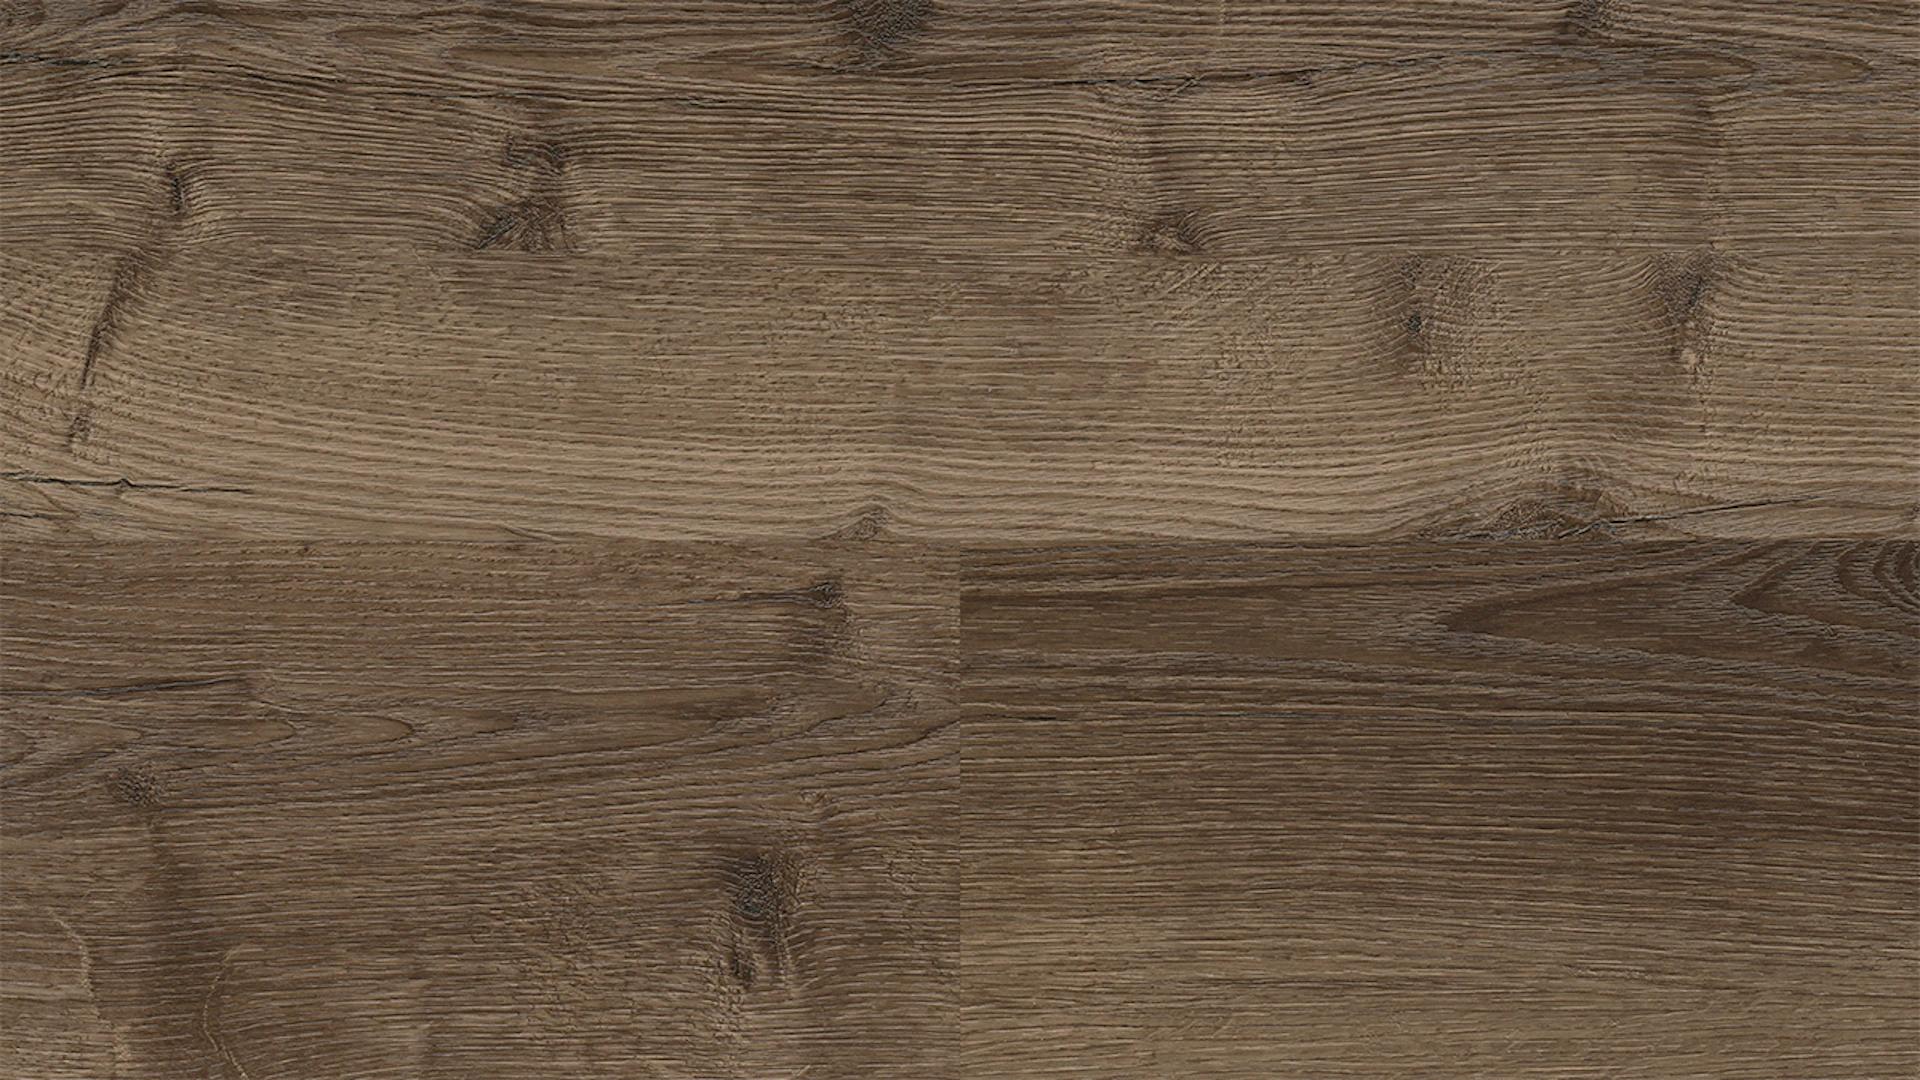 Wineo vinyle à coller - 400 wood XL Comfort Oak Dark | Grain synchronisé (DB299WXL)